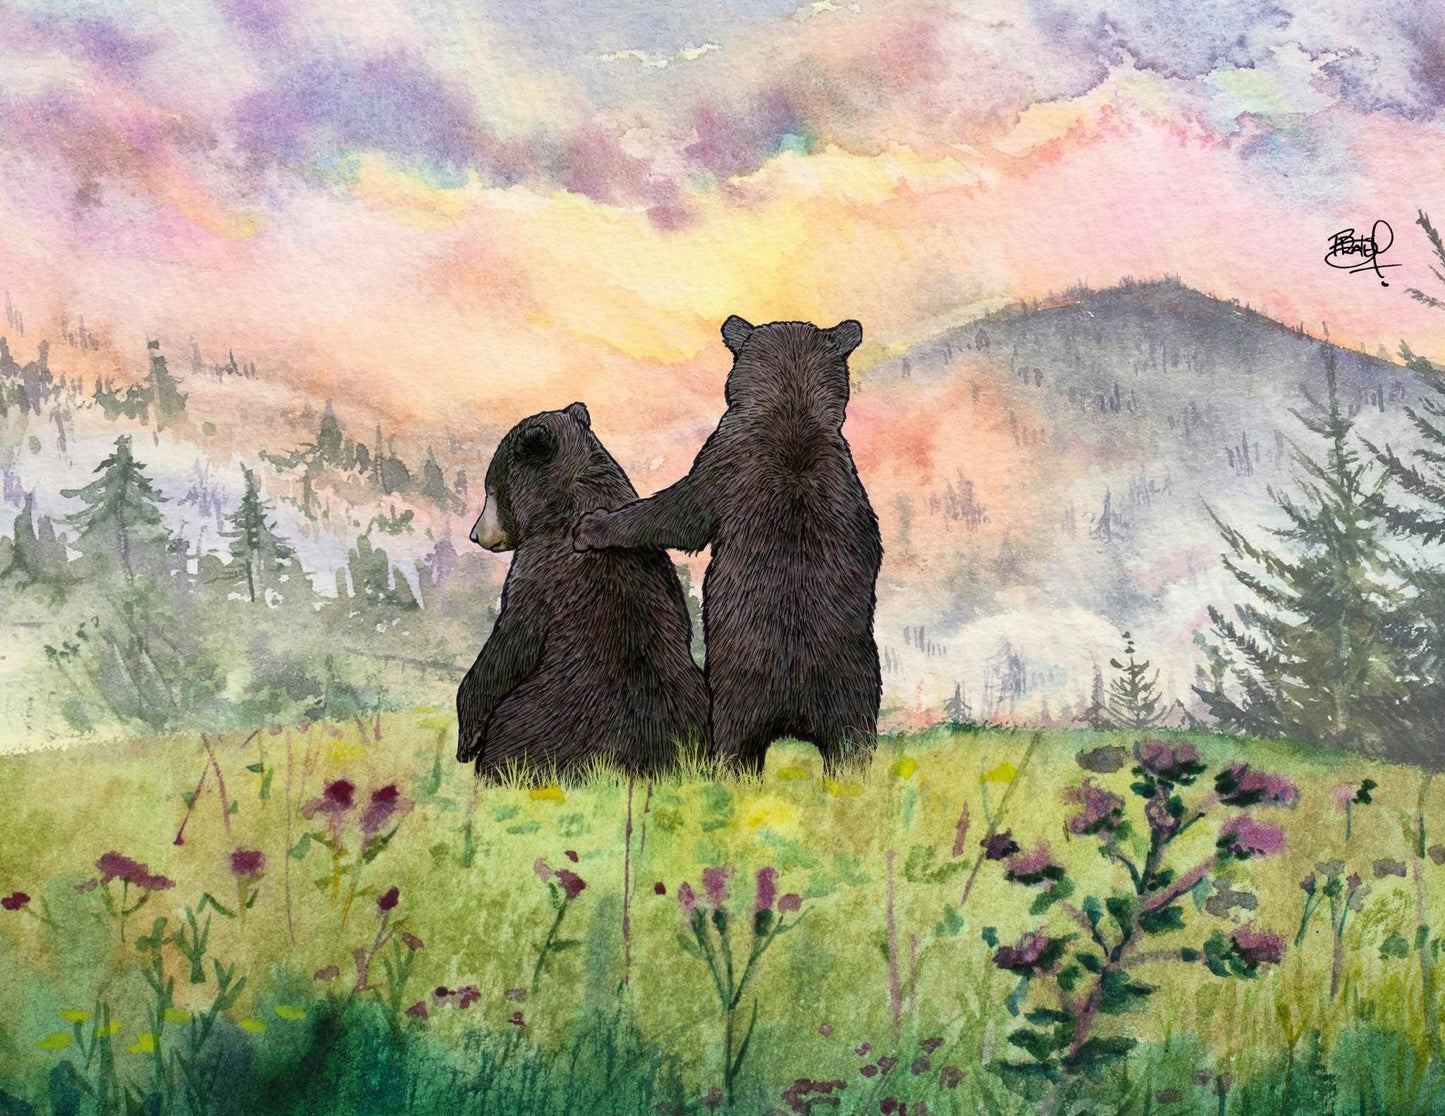 Unbearable Greeting Card (blank inside) by Shawn Braley Illustration